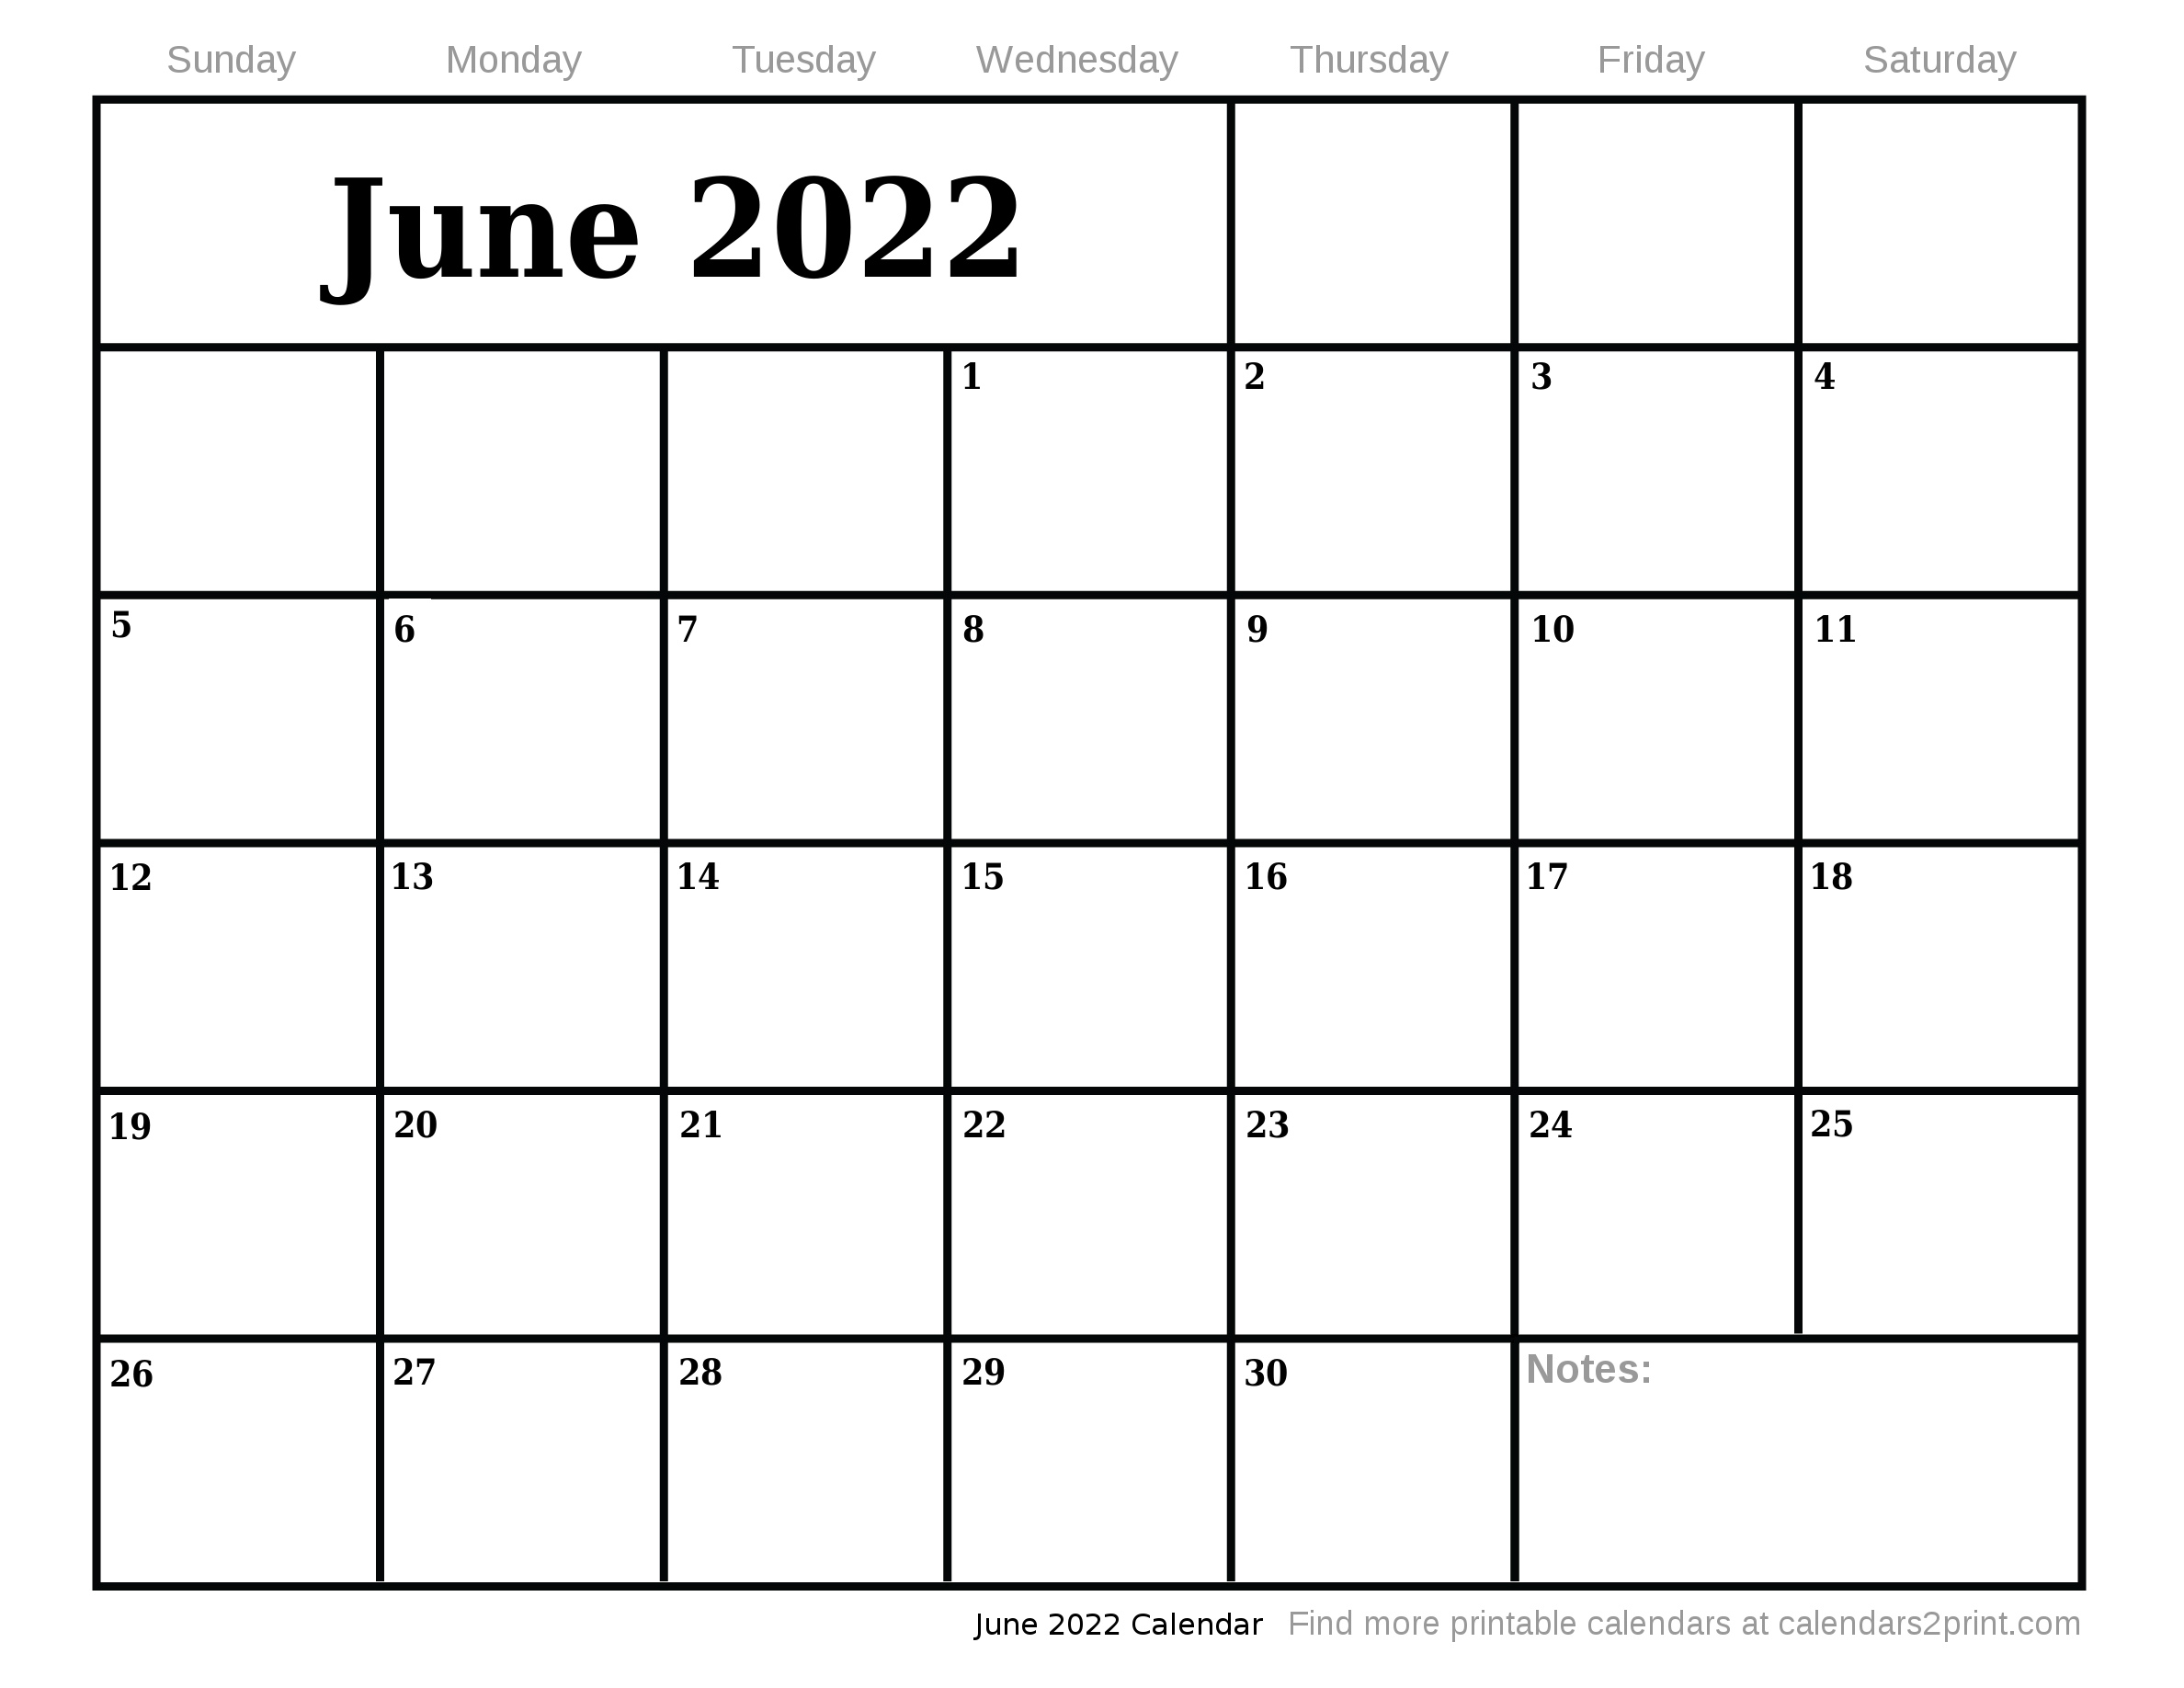 Jun 2022 Printable Calendar